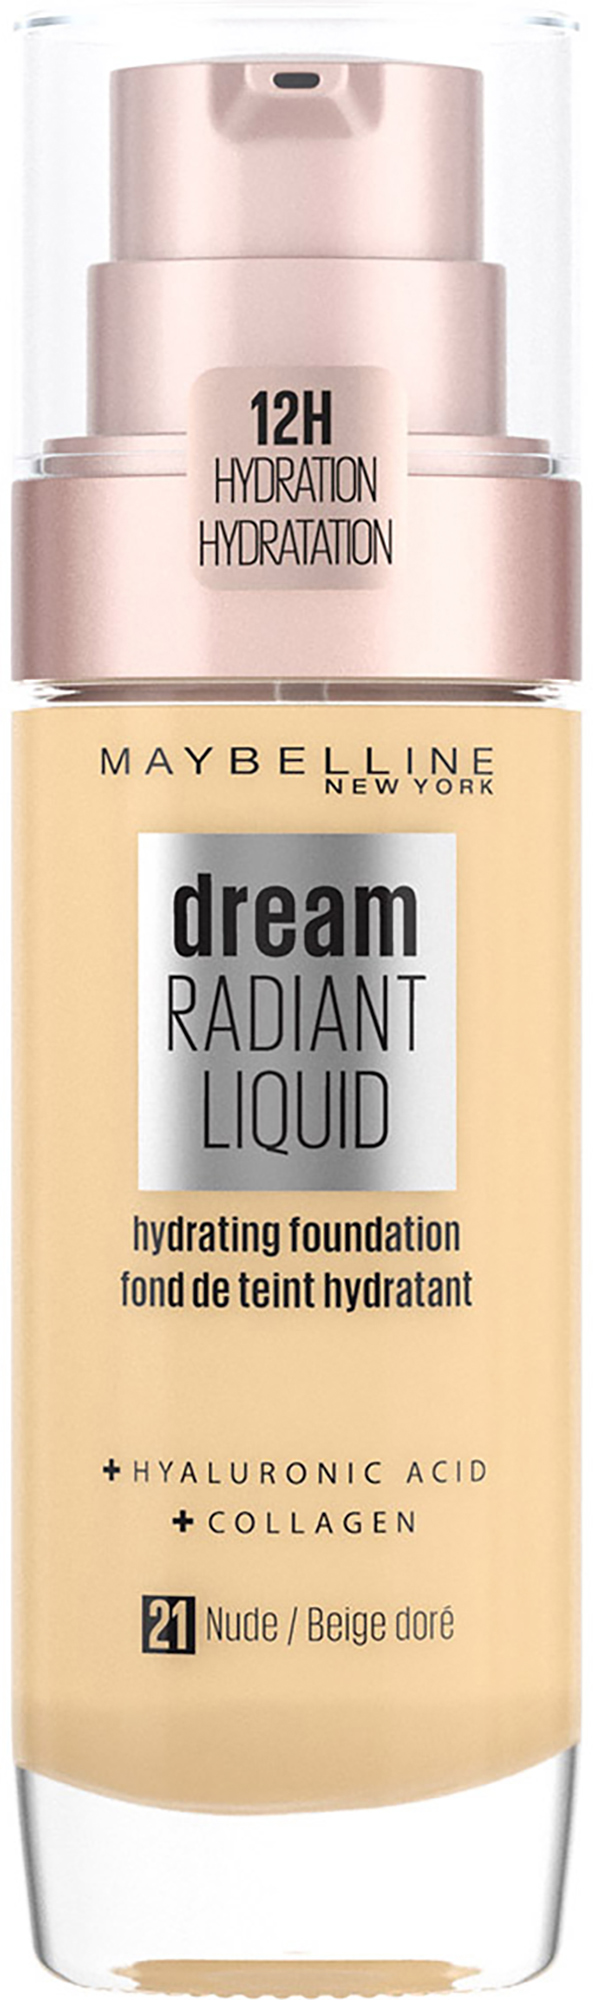 Maybelline Dream Satin Liquid Foundation 021 Nude